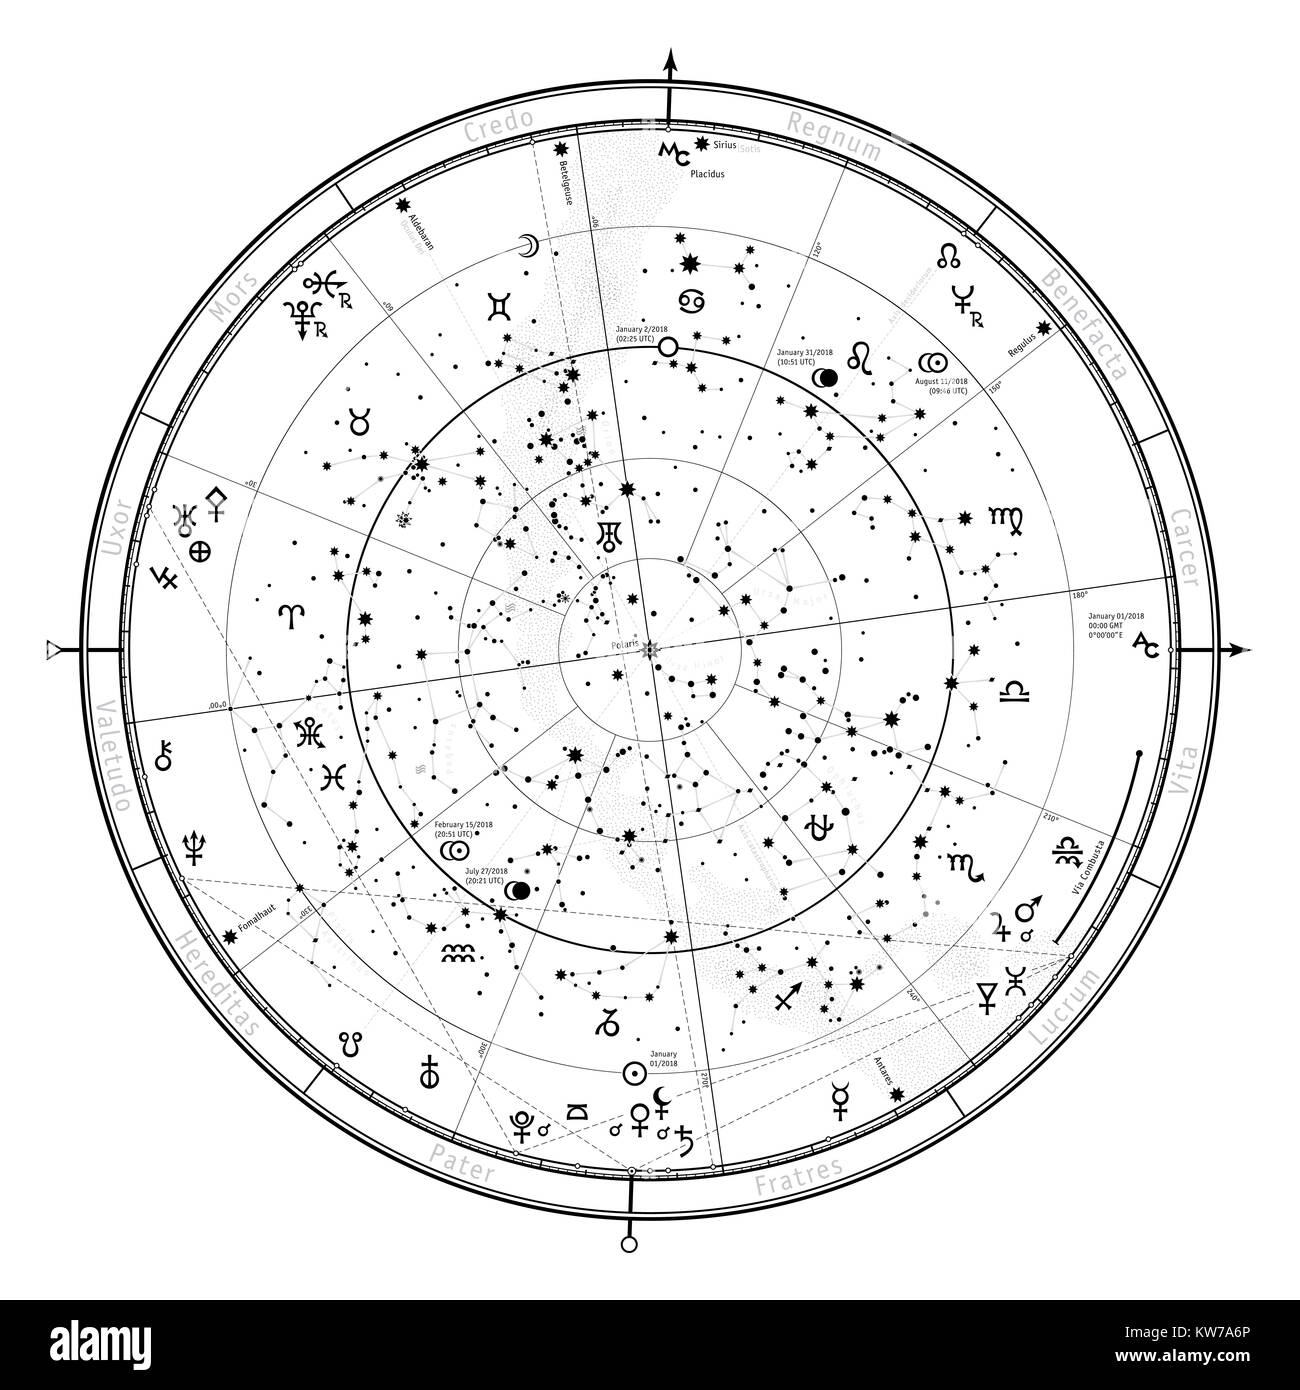 Astrological Celestial map of Northern Hemisphere. Horoscope on January 1, 2018 (00:00 GMT). Stock Photo